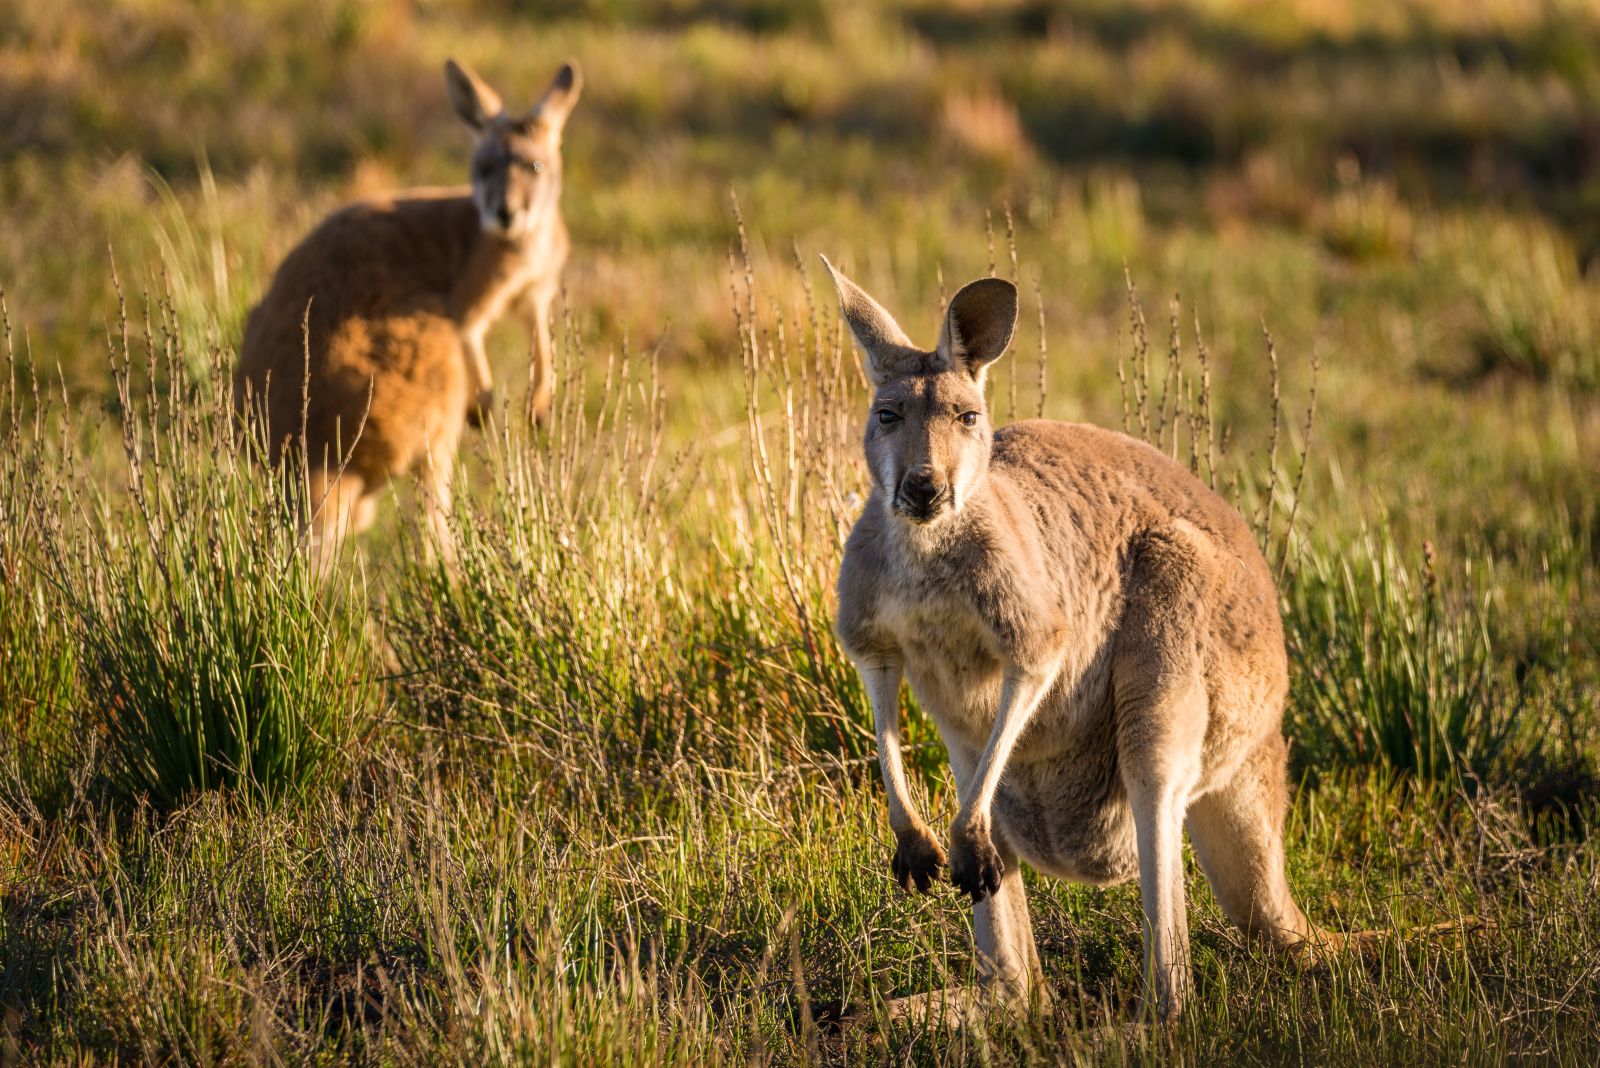 Kangaroos in a field in Australia